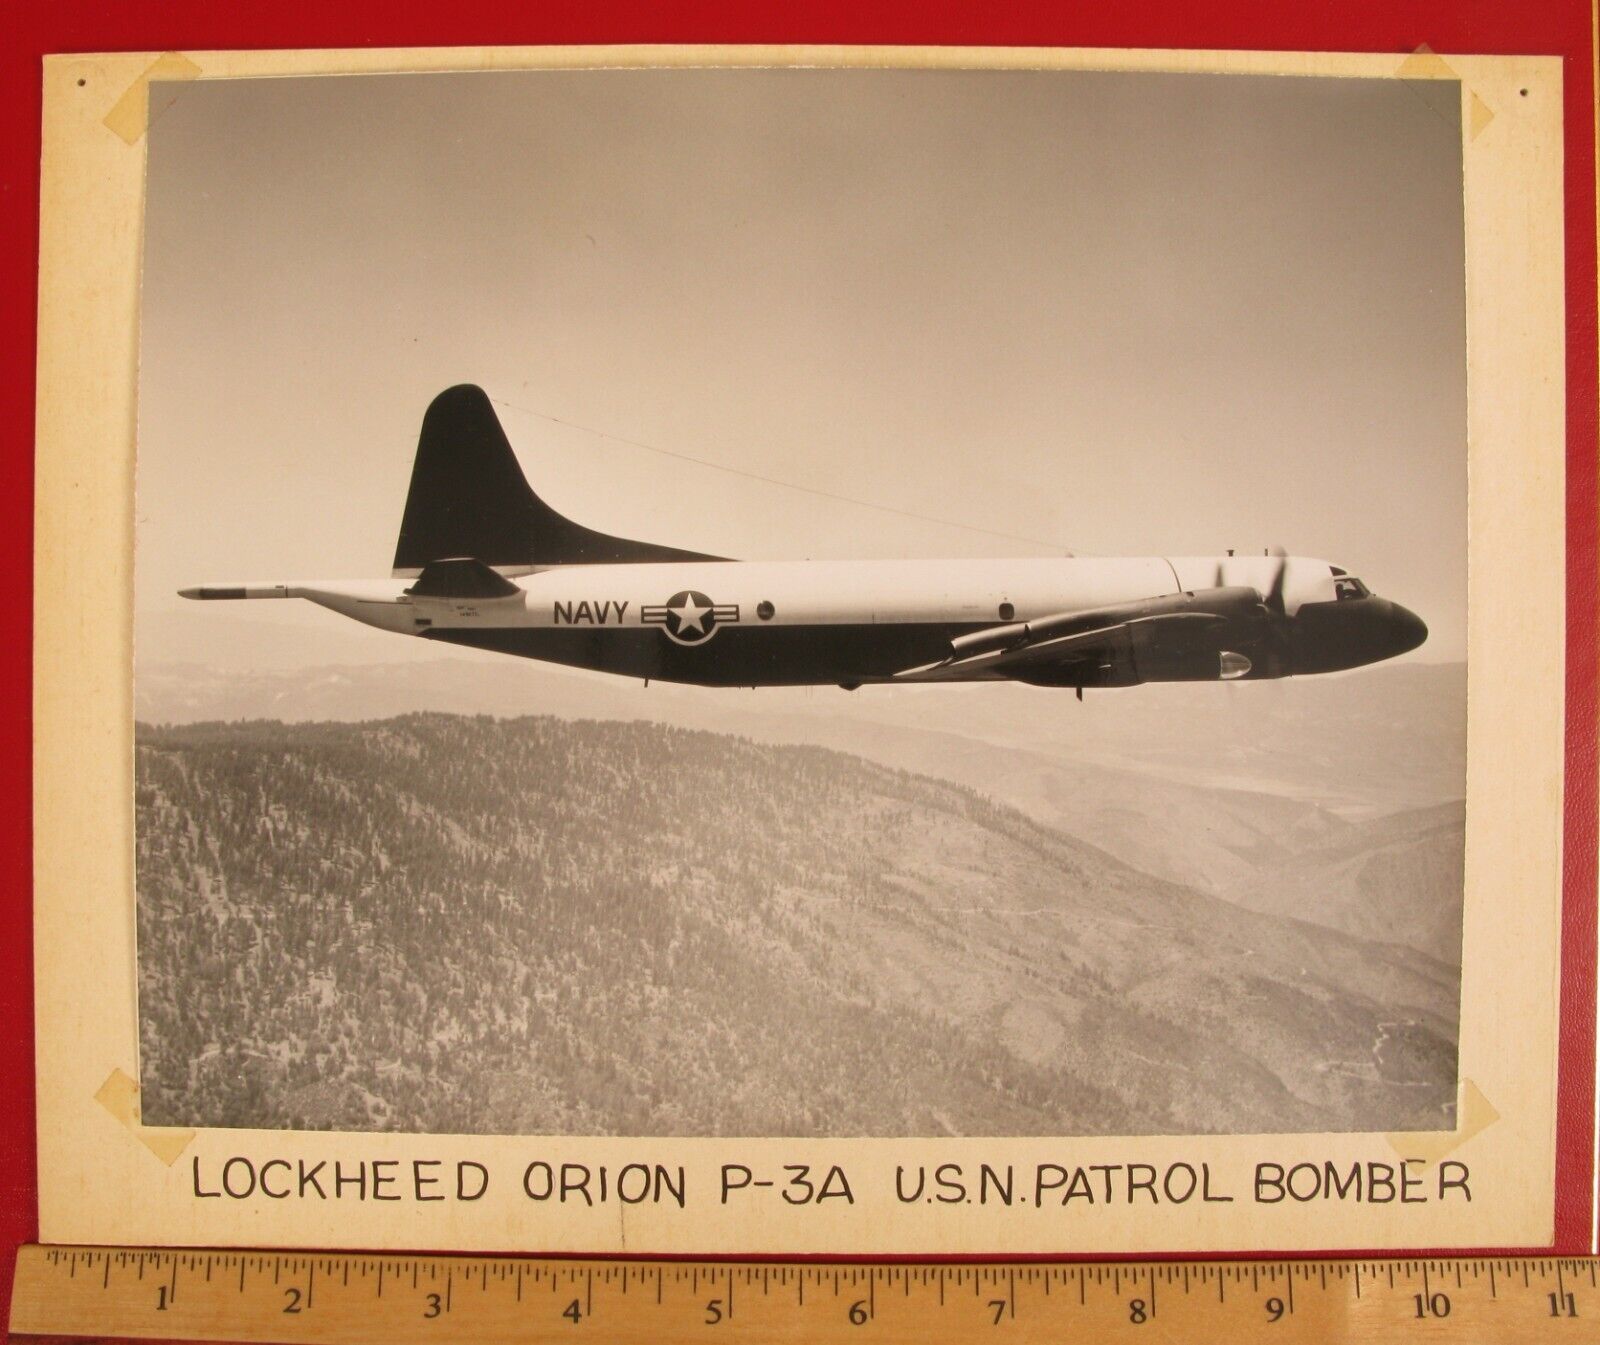 VINTAGE PHOTOGRAPH LOCKHEED ORION P-3A PATROL BOMBER USN MILITARY AIRPLANE 